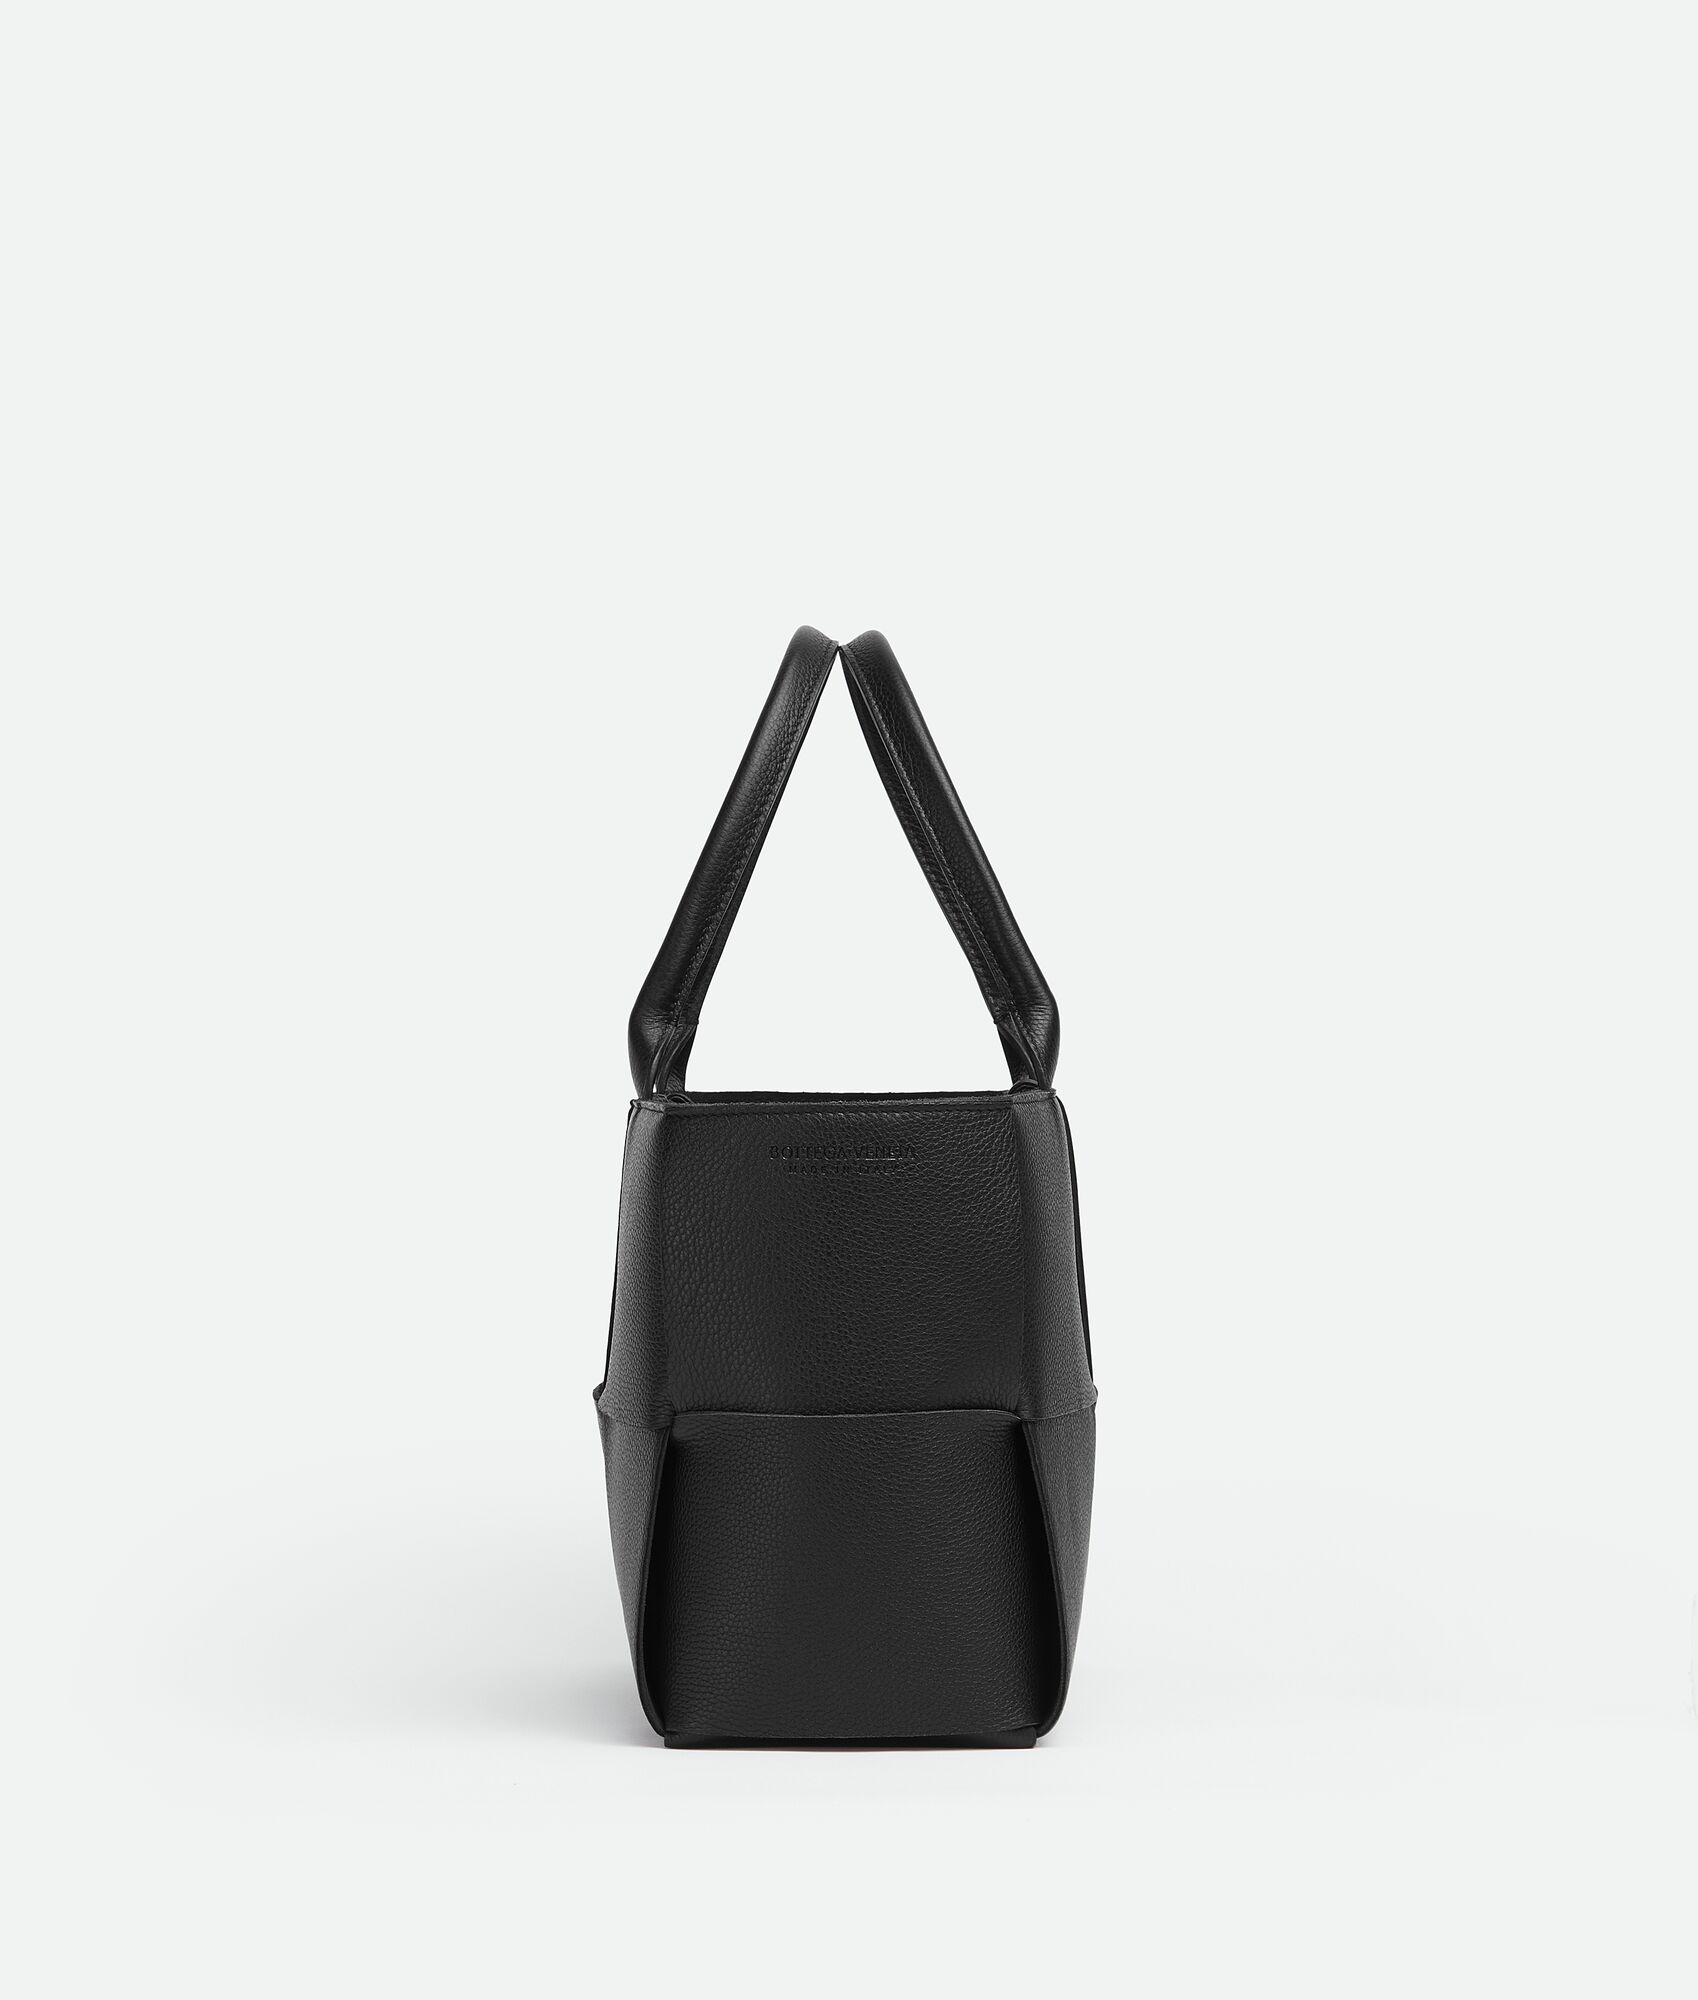 Bottega Veneta® Women's Small Arco Tote Bag in Black. Shop online now.